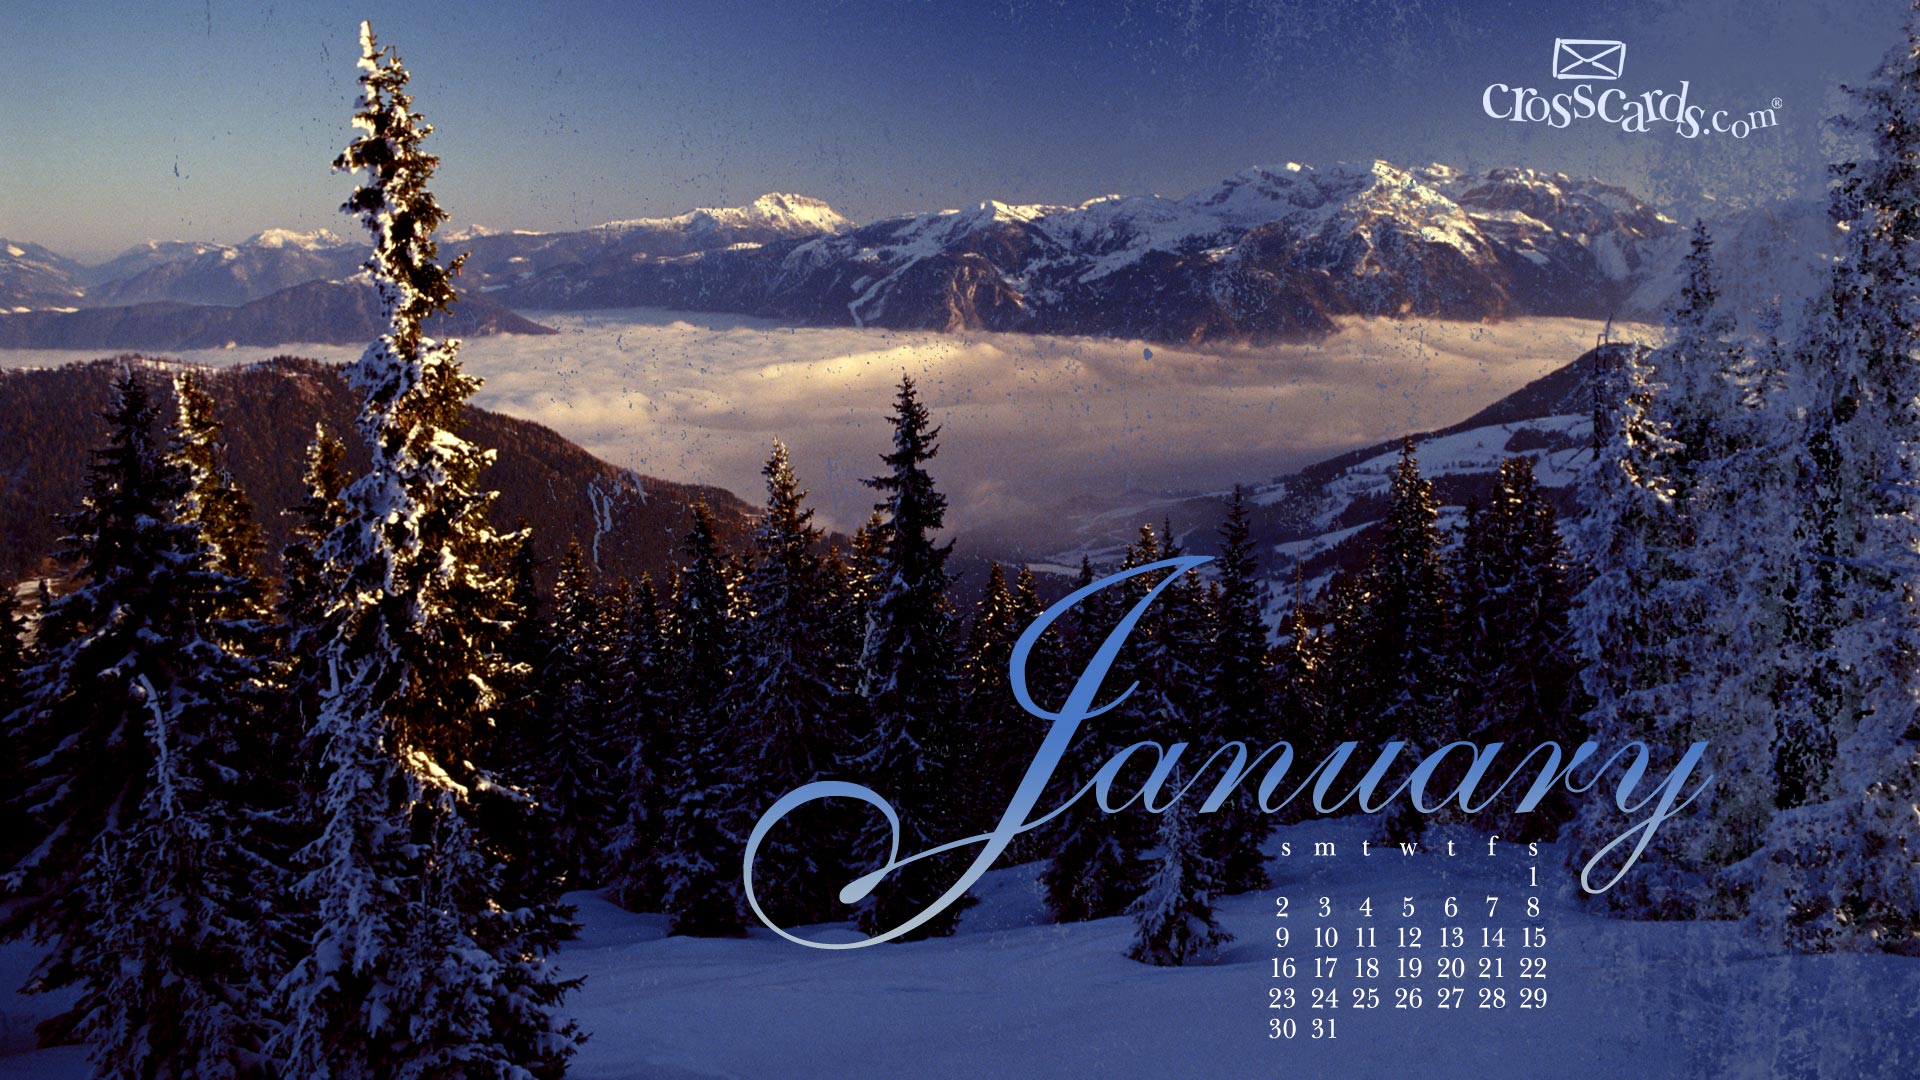 January Calendars Puter Monthly Christian Crosscards Wallpaper